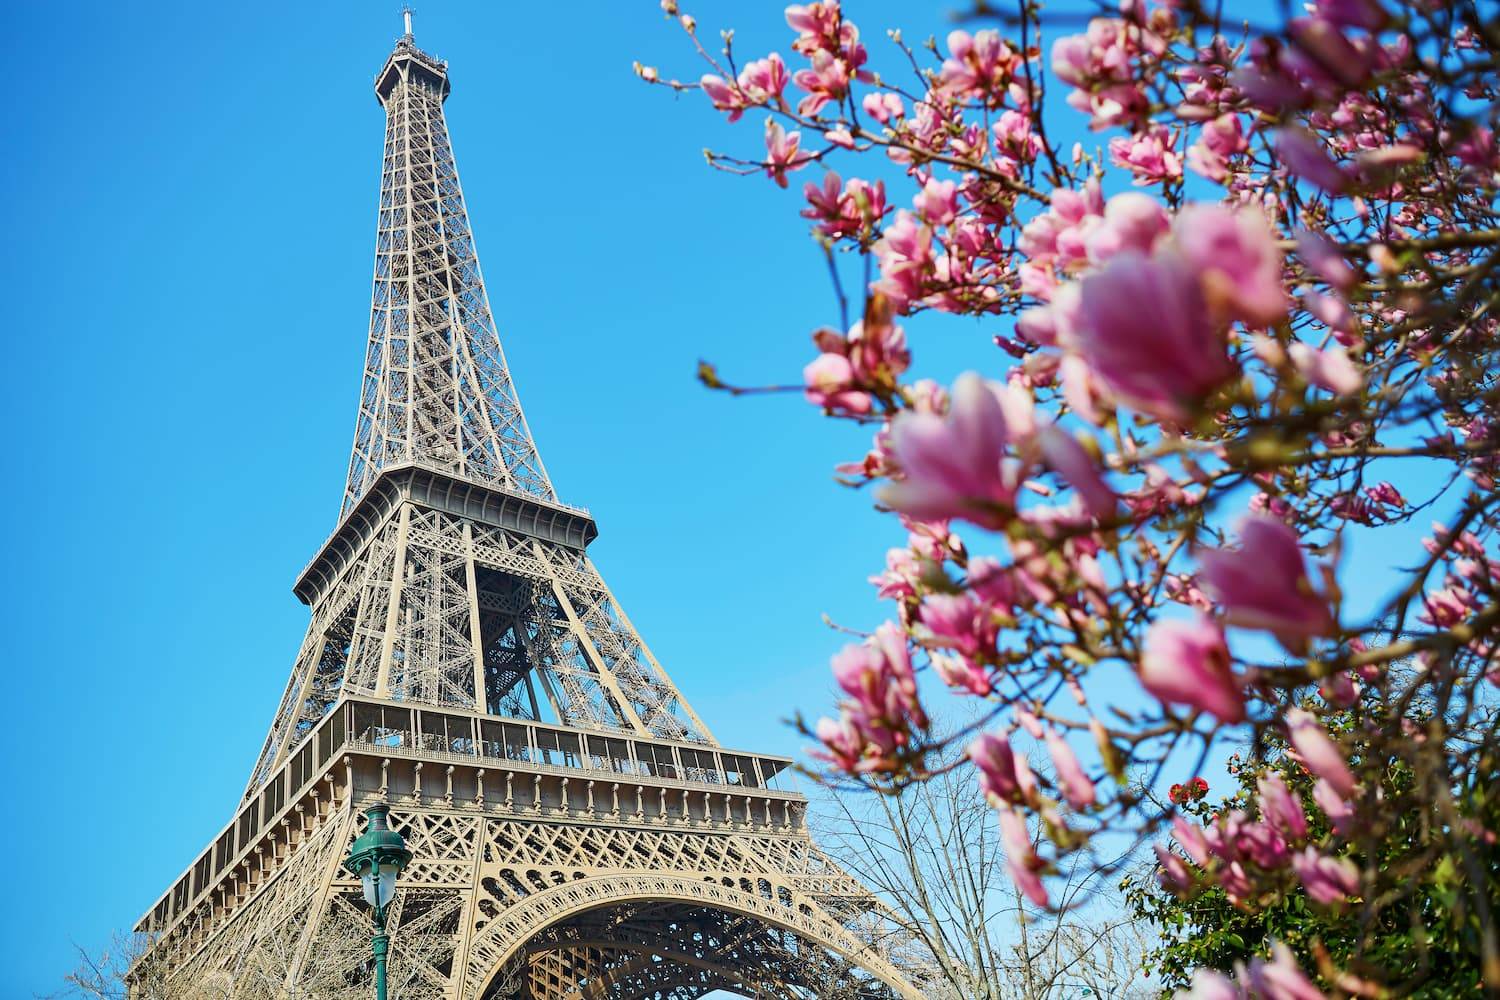 Free Tour Torre Eiffel y Arco del Triunfo